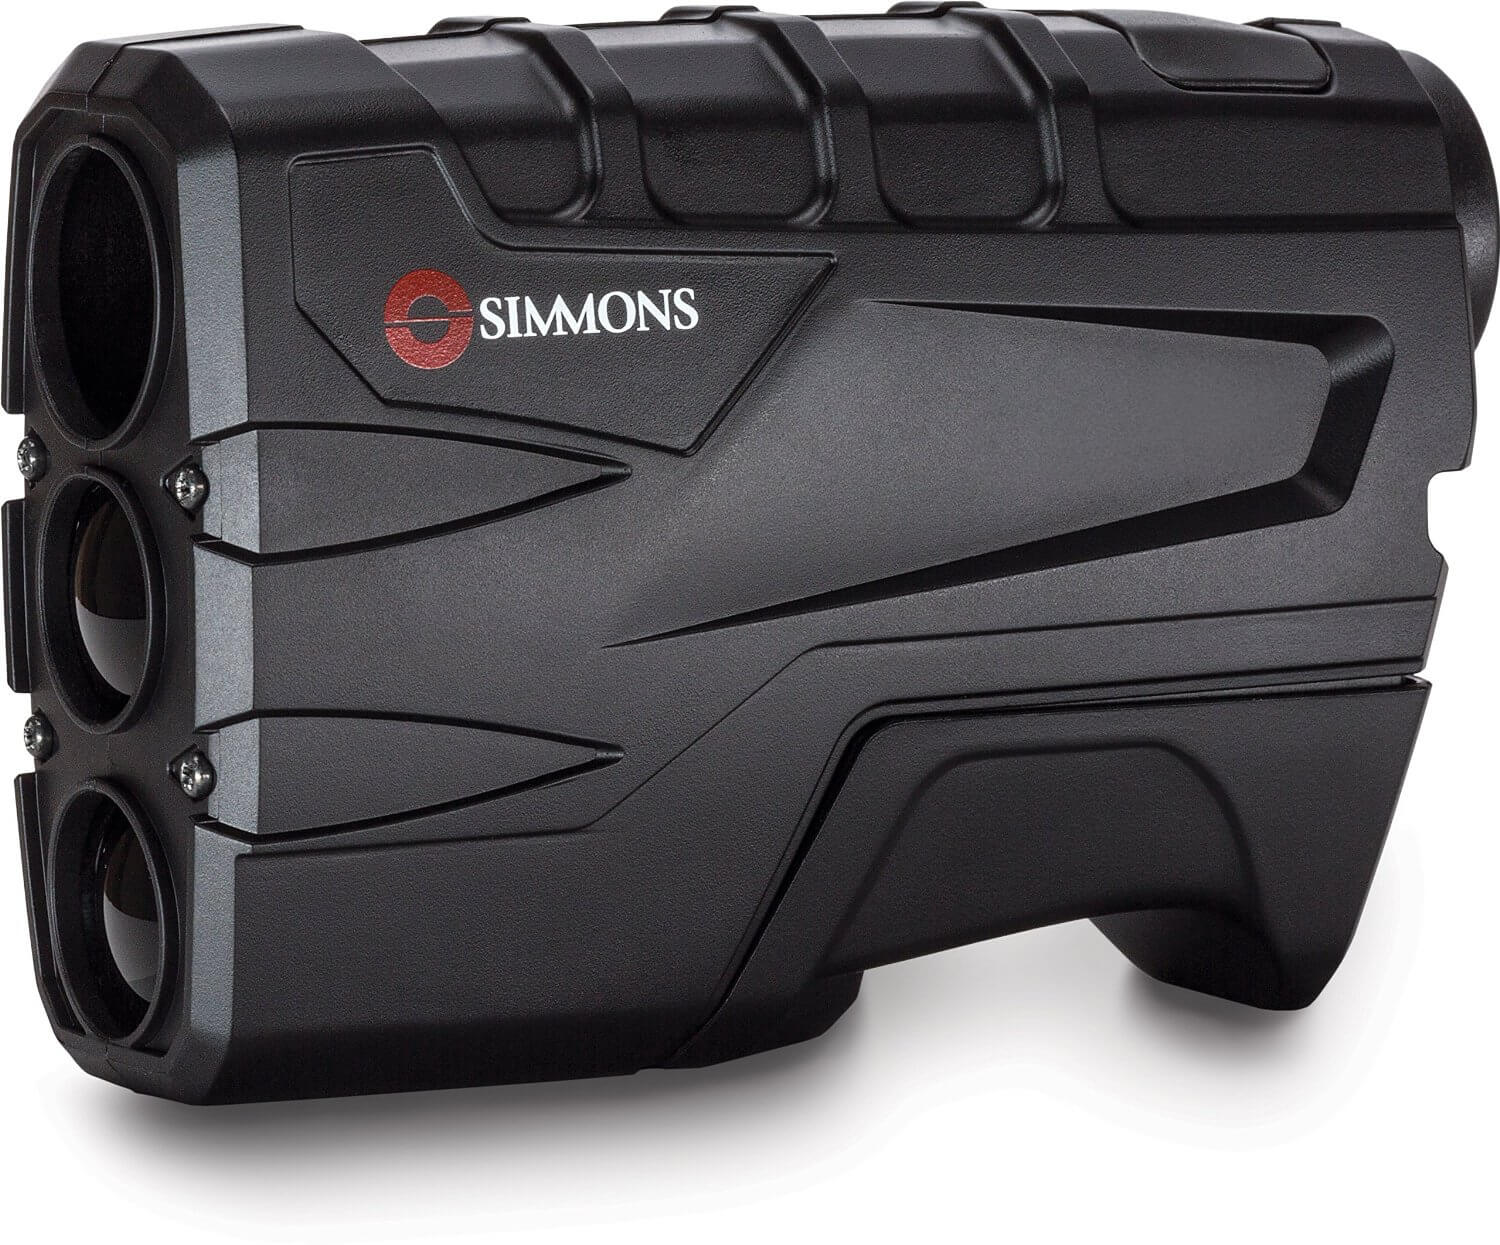 simmons-801600-volt-600-laser-rangefinder